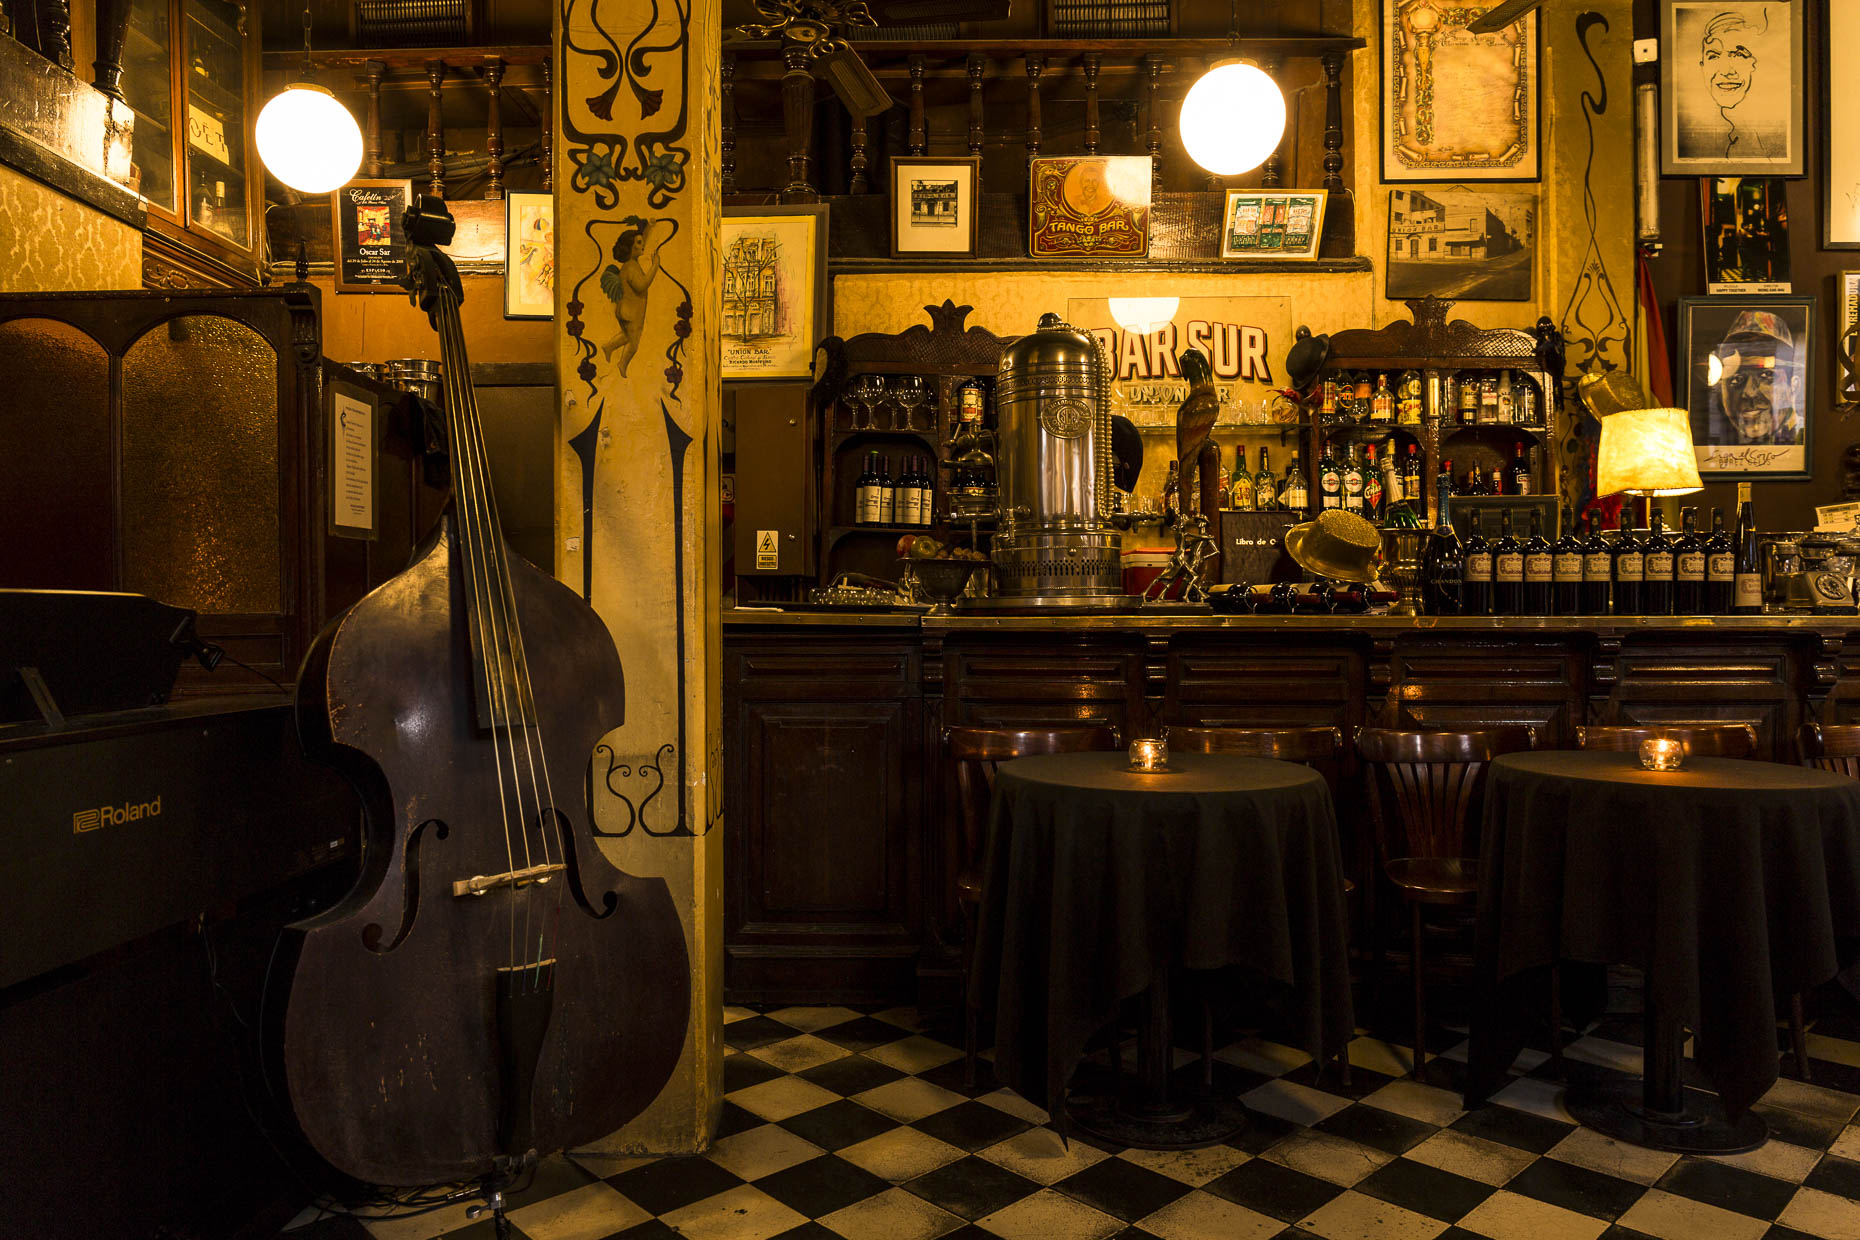 Interior of Tango Bar Sur